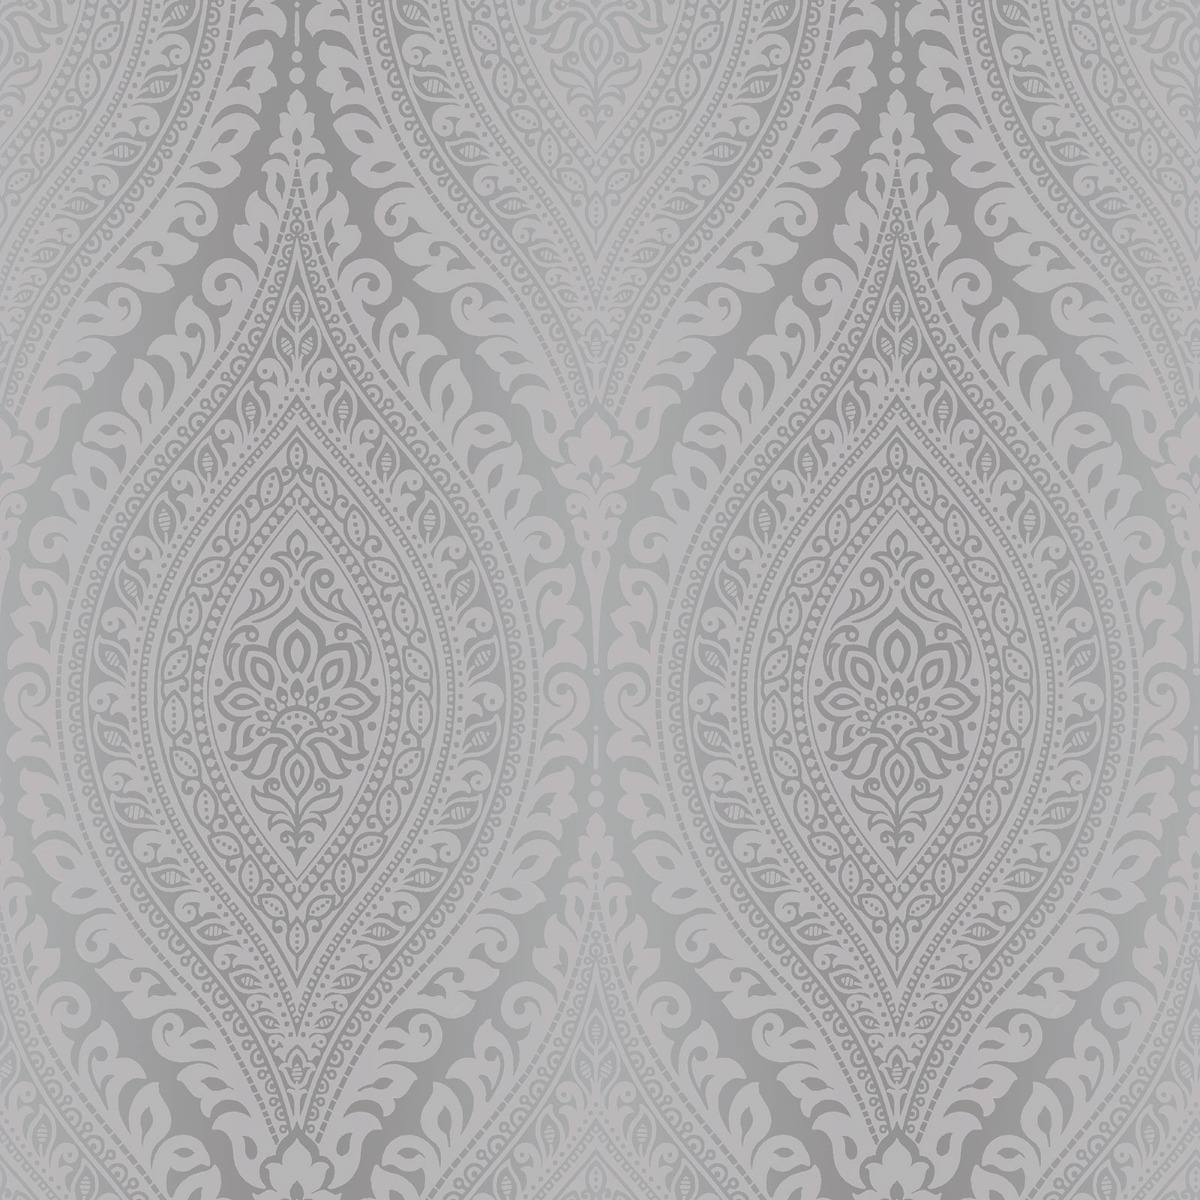 Silver A17703 Grandeco Kismet Damask Pattern Wallpaper Metallic Glitter Motif Art Deco